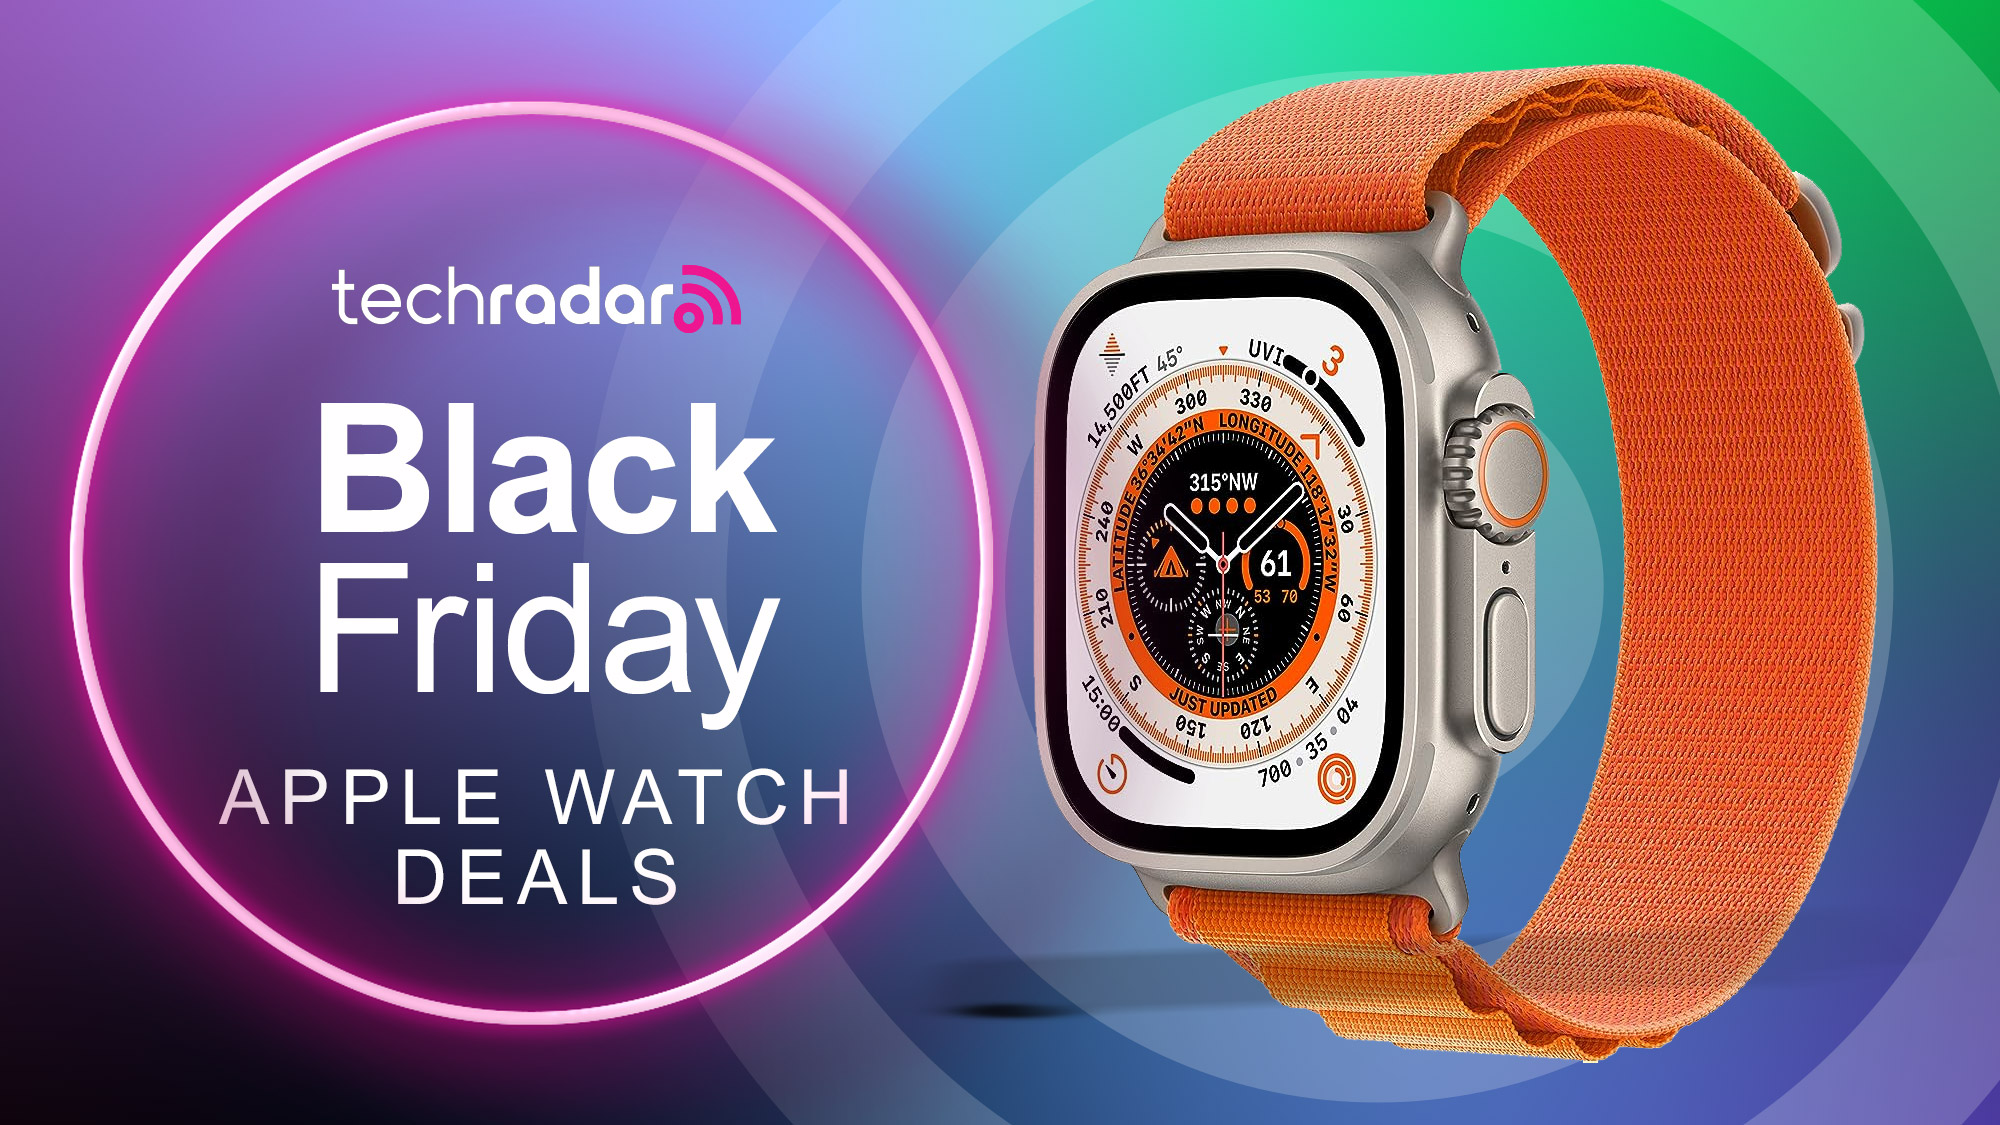 Apple Watch Black Friday deals The best sales and deals still